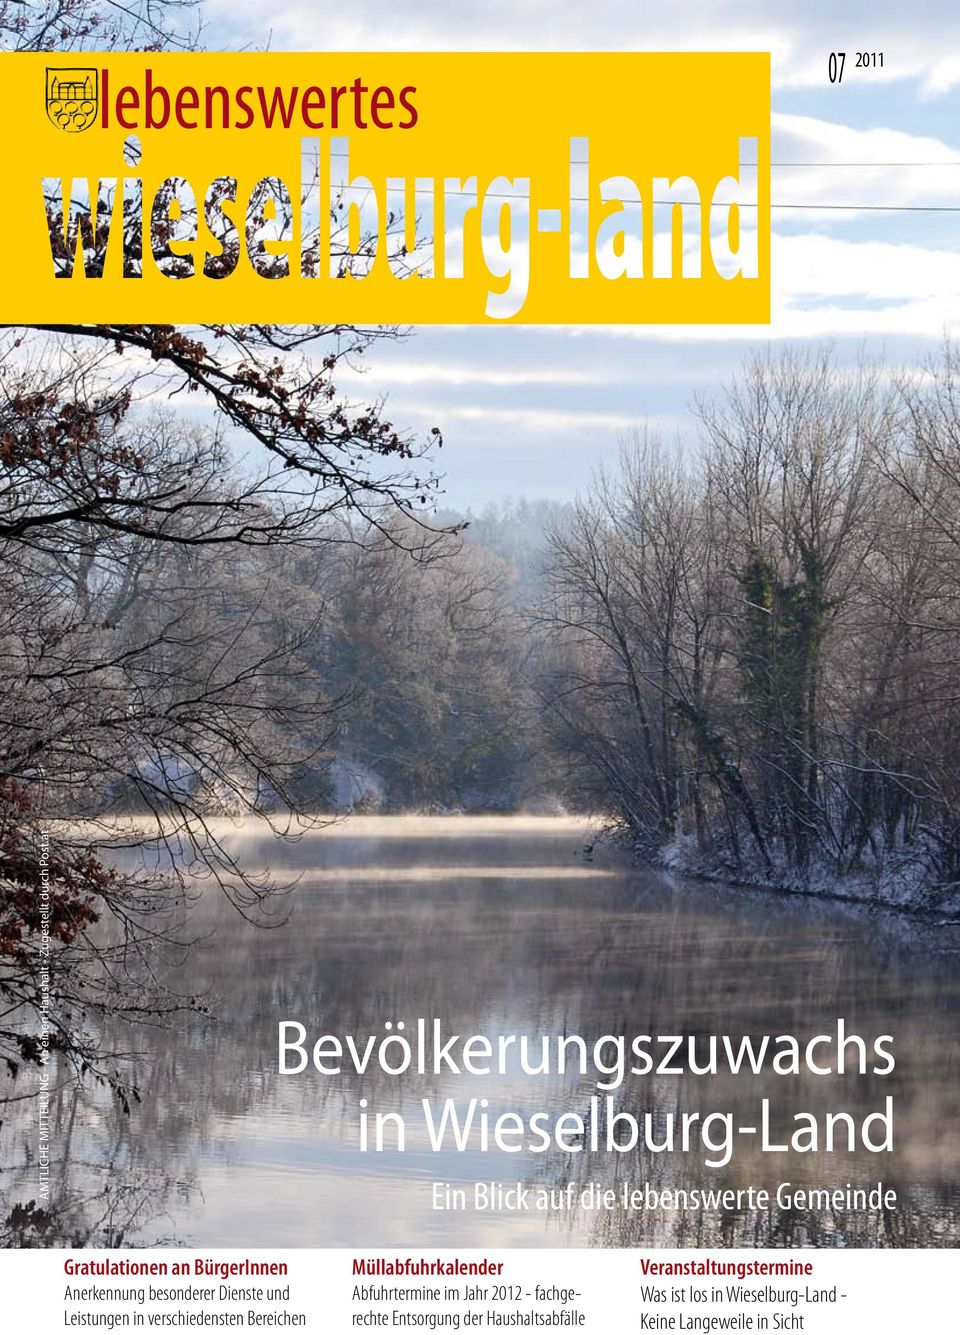 Wieselburg-land dating portal - Feistritztal wo treffen sich singles